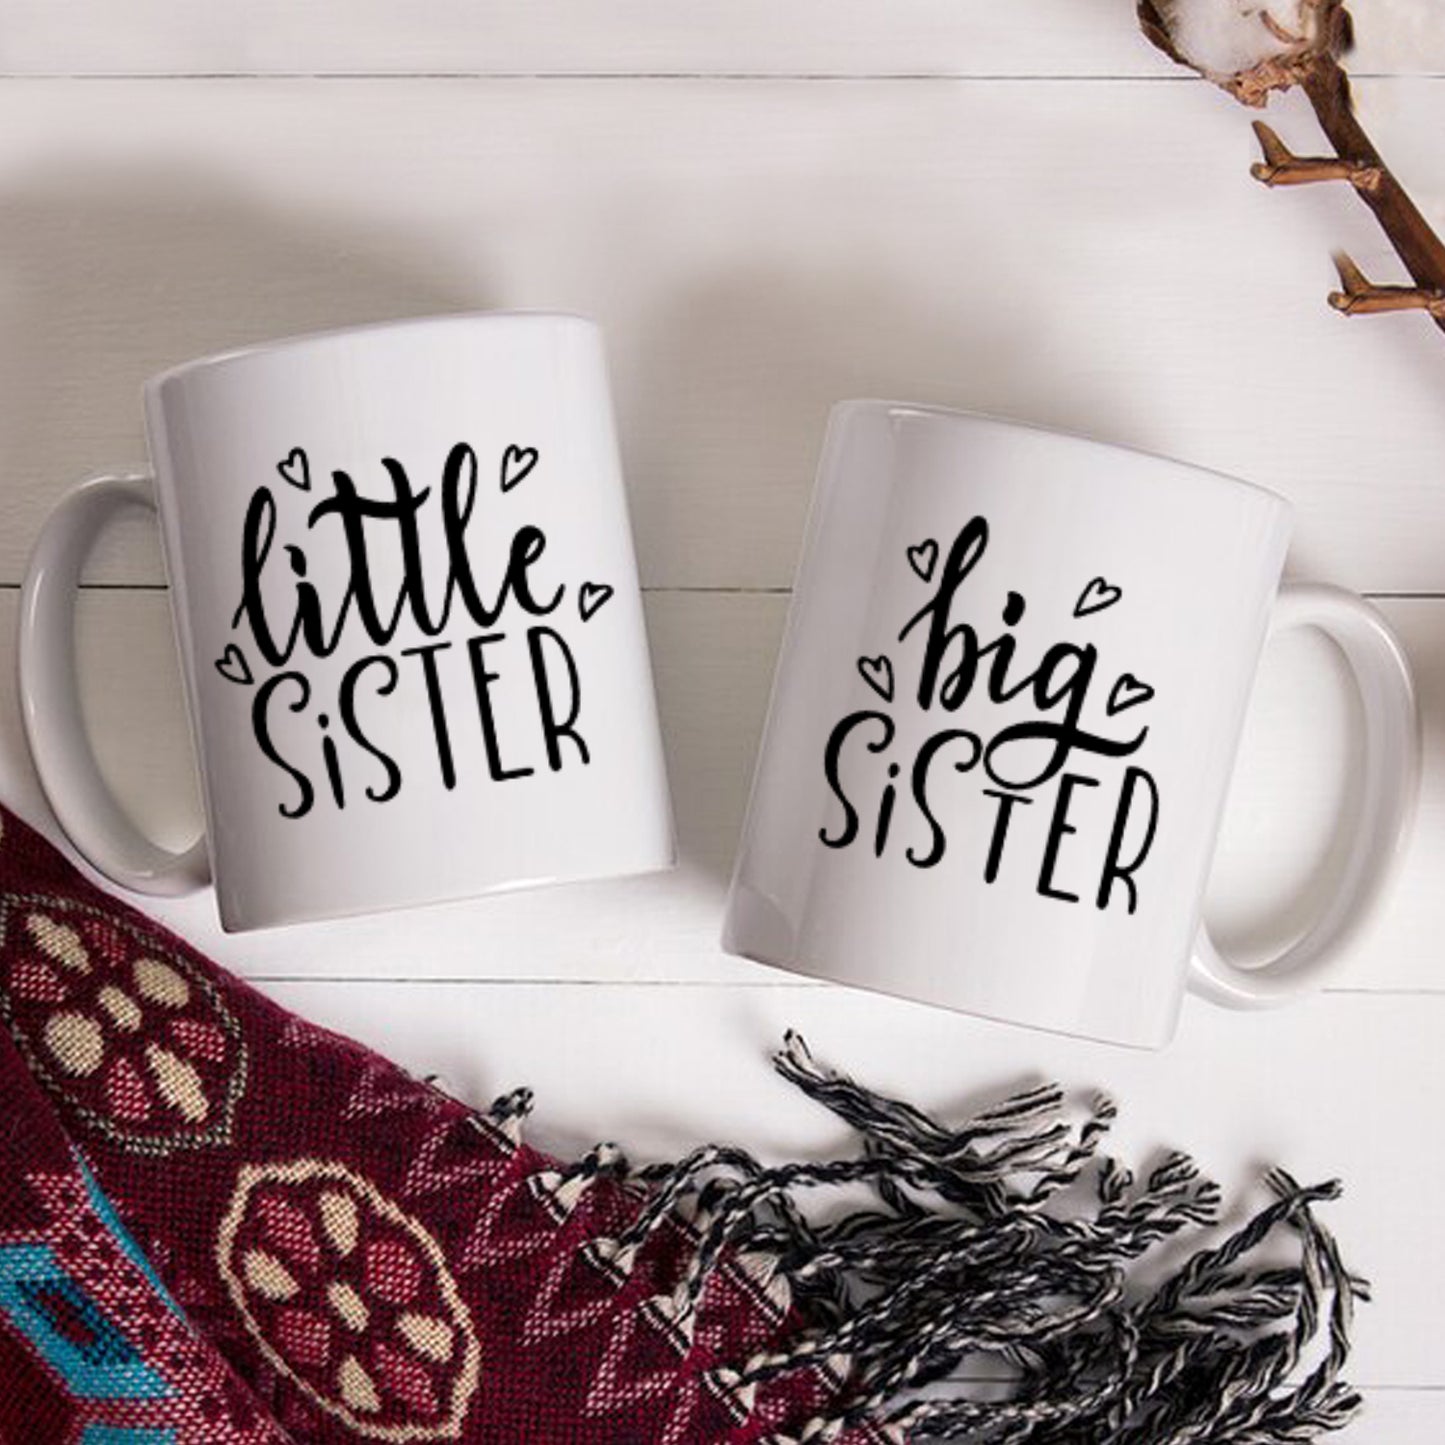 Little & Big Sister Mug Set of 2